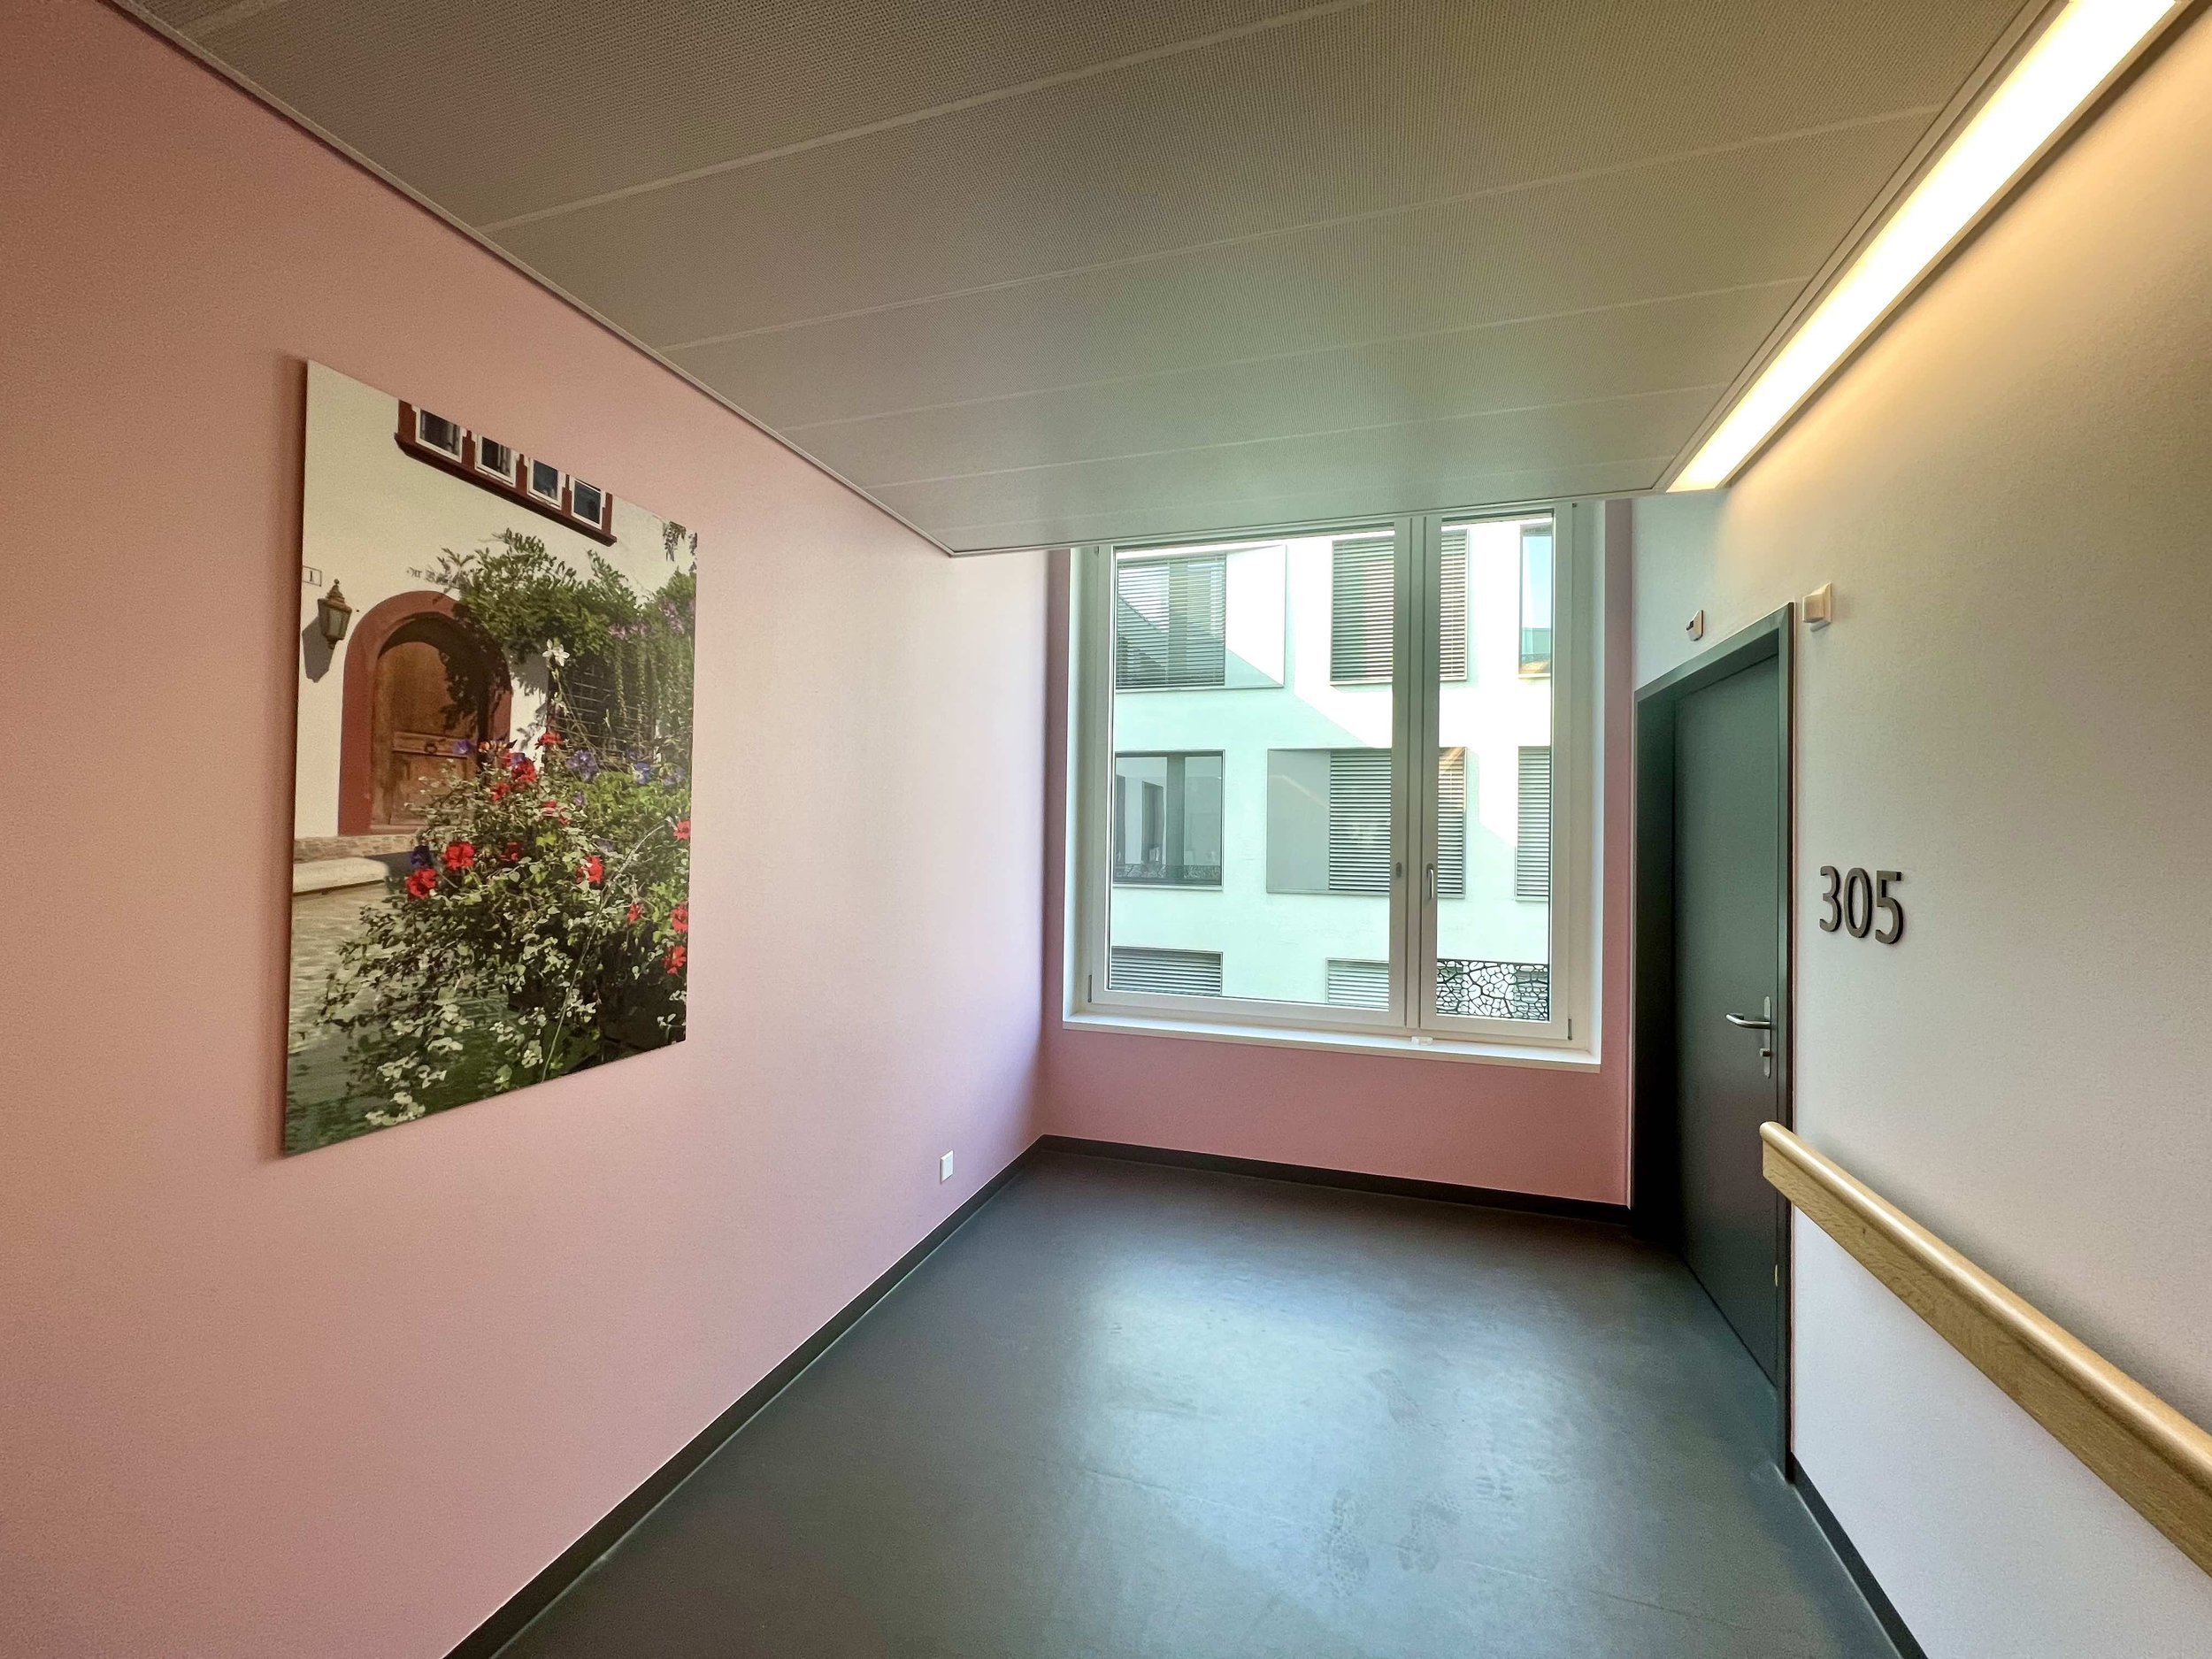  images on the hallways walls in Felix Platter Hospital in Basel (Copy)